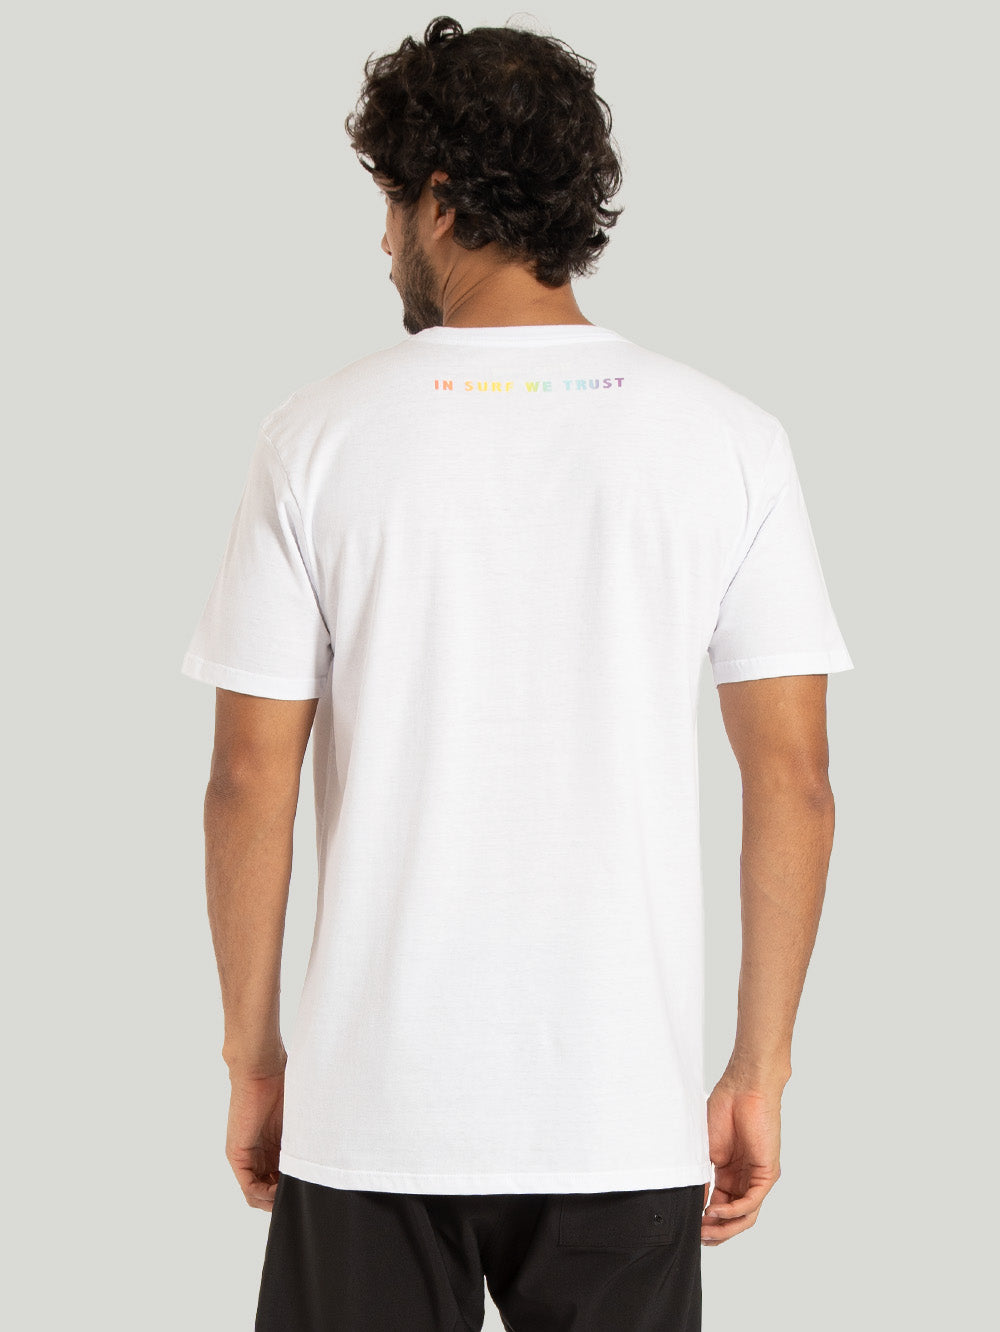 Camiseta Hang Loose Hangbow Branco